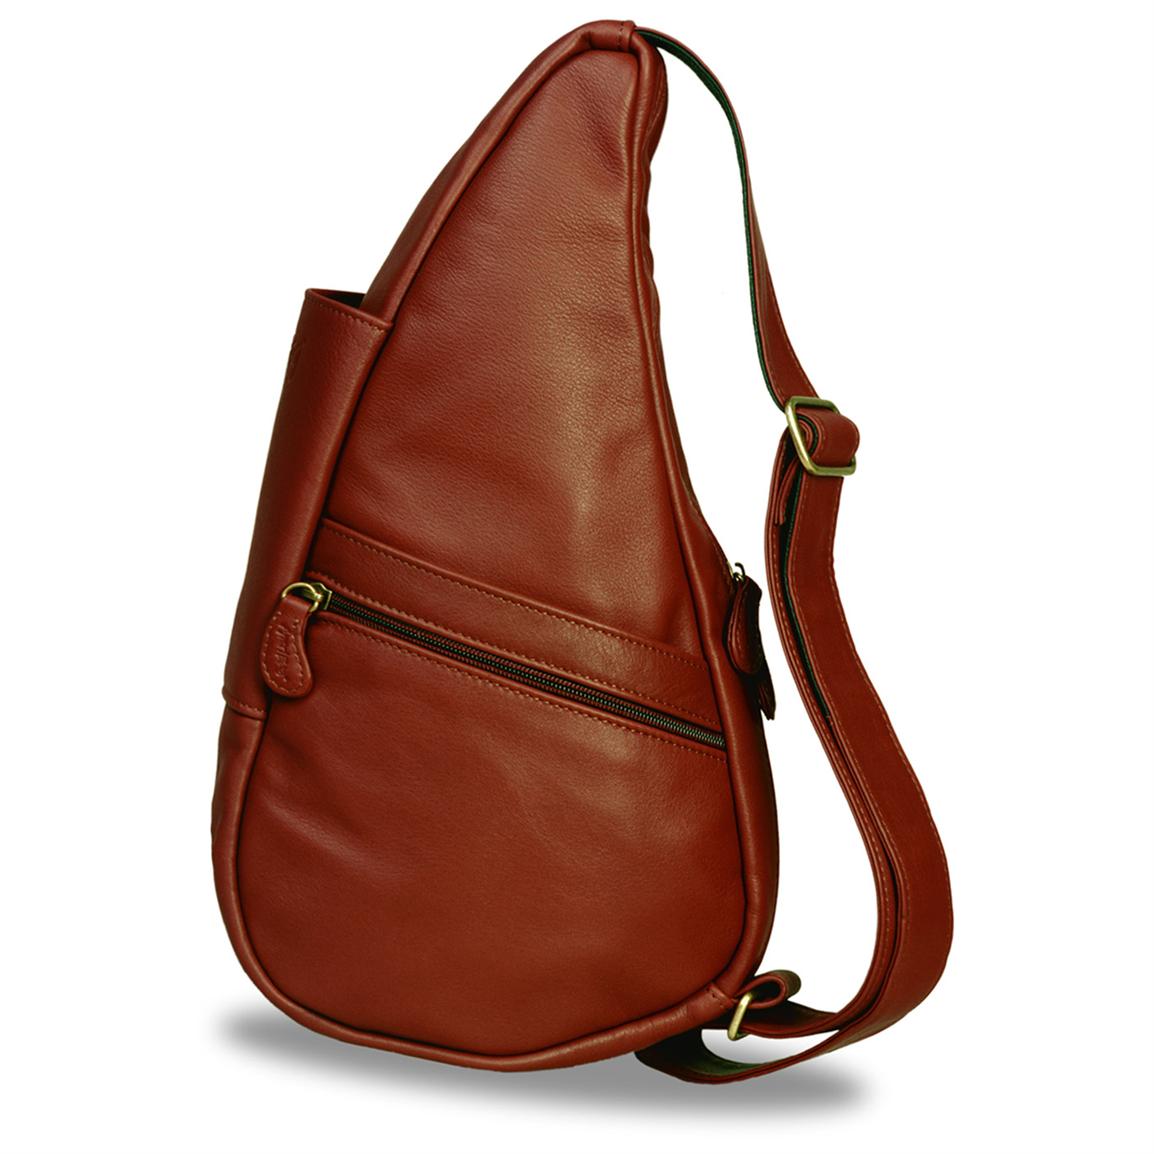 AmeriBag Classic Leather Healthy Back Bag® Tote, Medium - 172410, Purses & Handbags at Sportsman ...